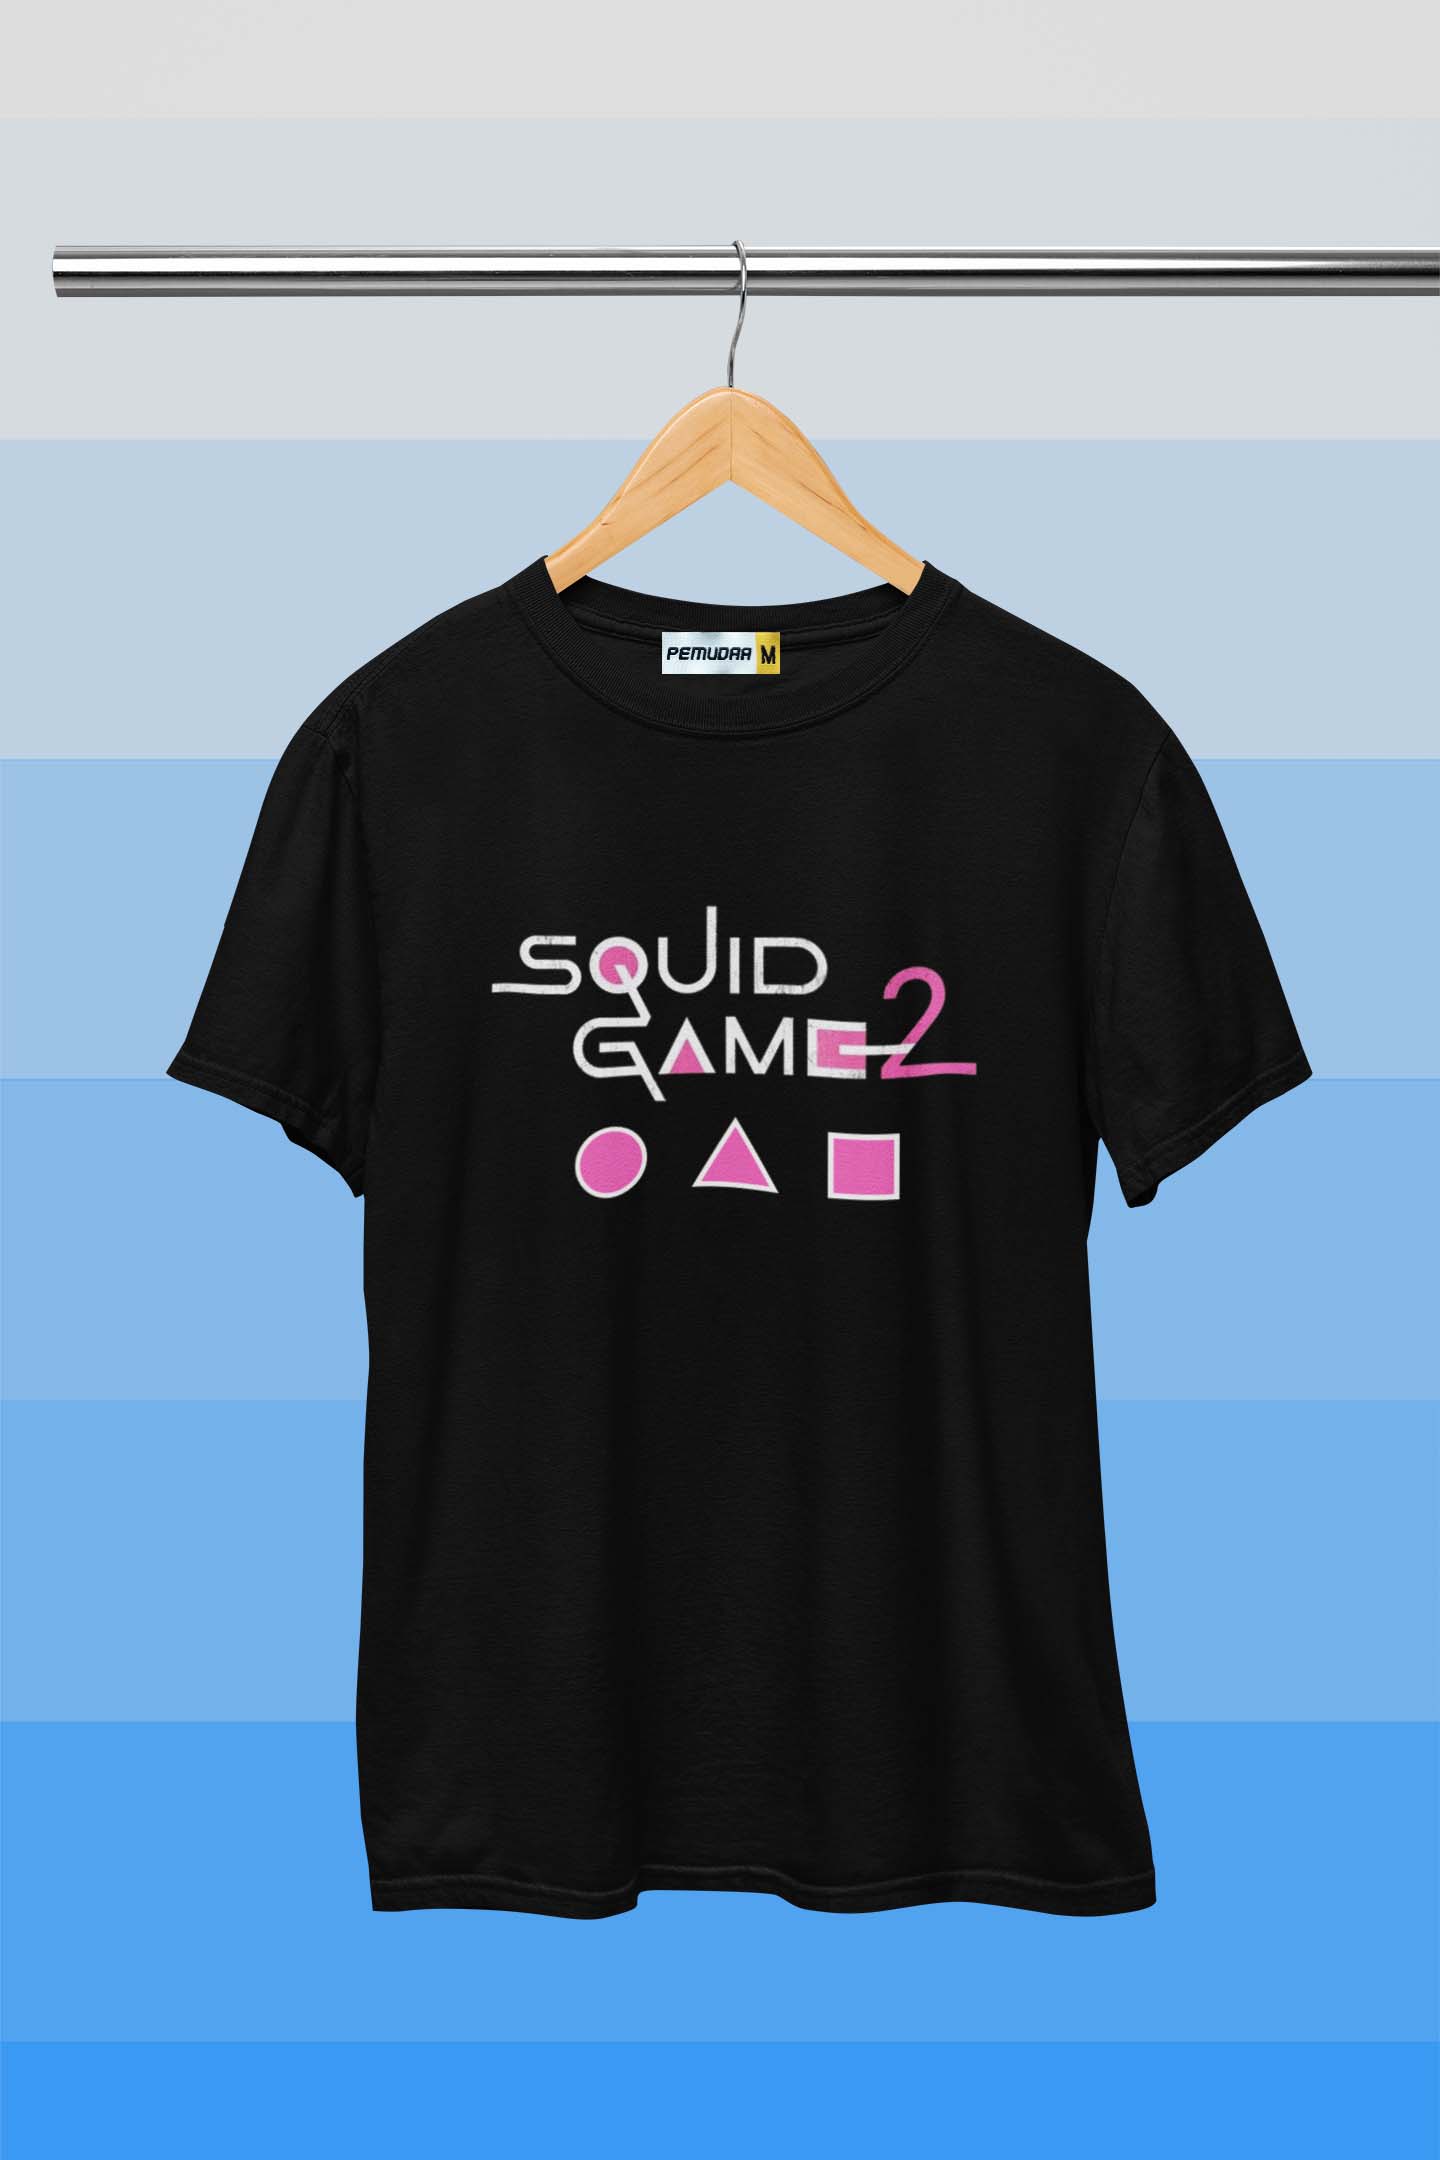 Squid Game 2 Men Graphic Printed T Shirt Black